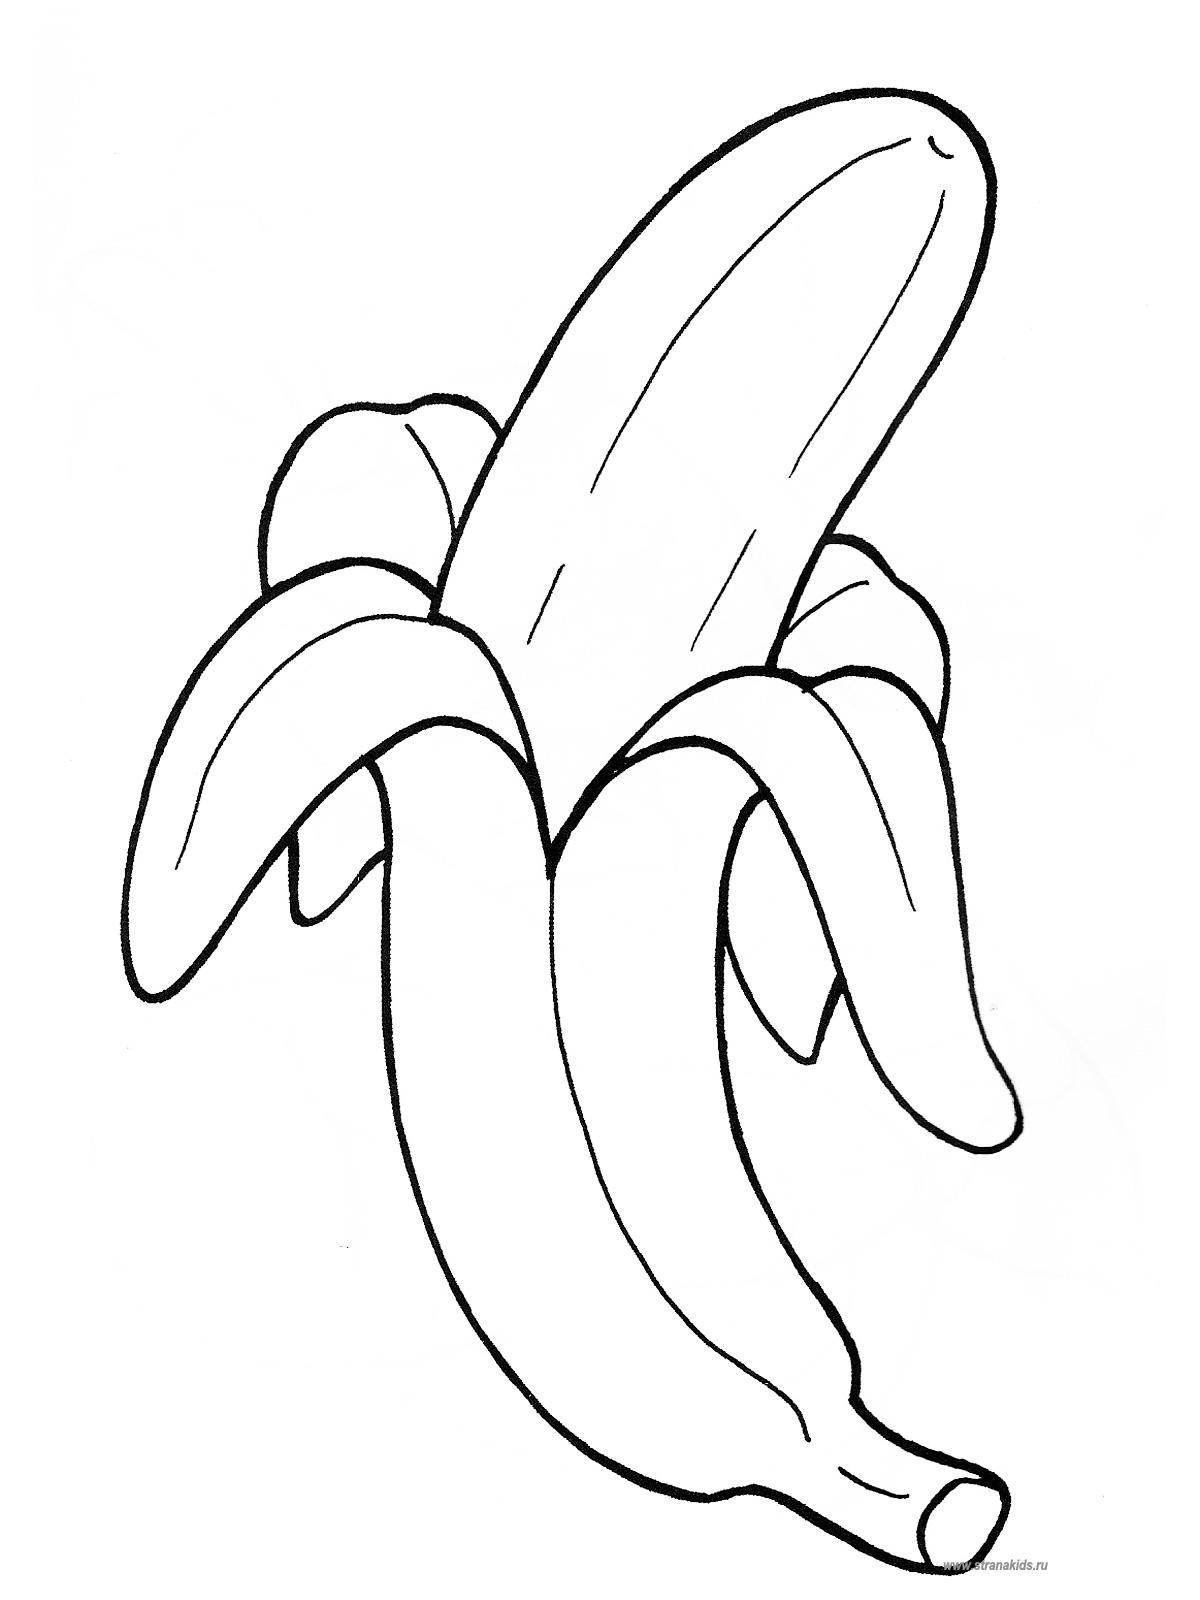 Раскраска бананов (банан, малыши, цвета)